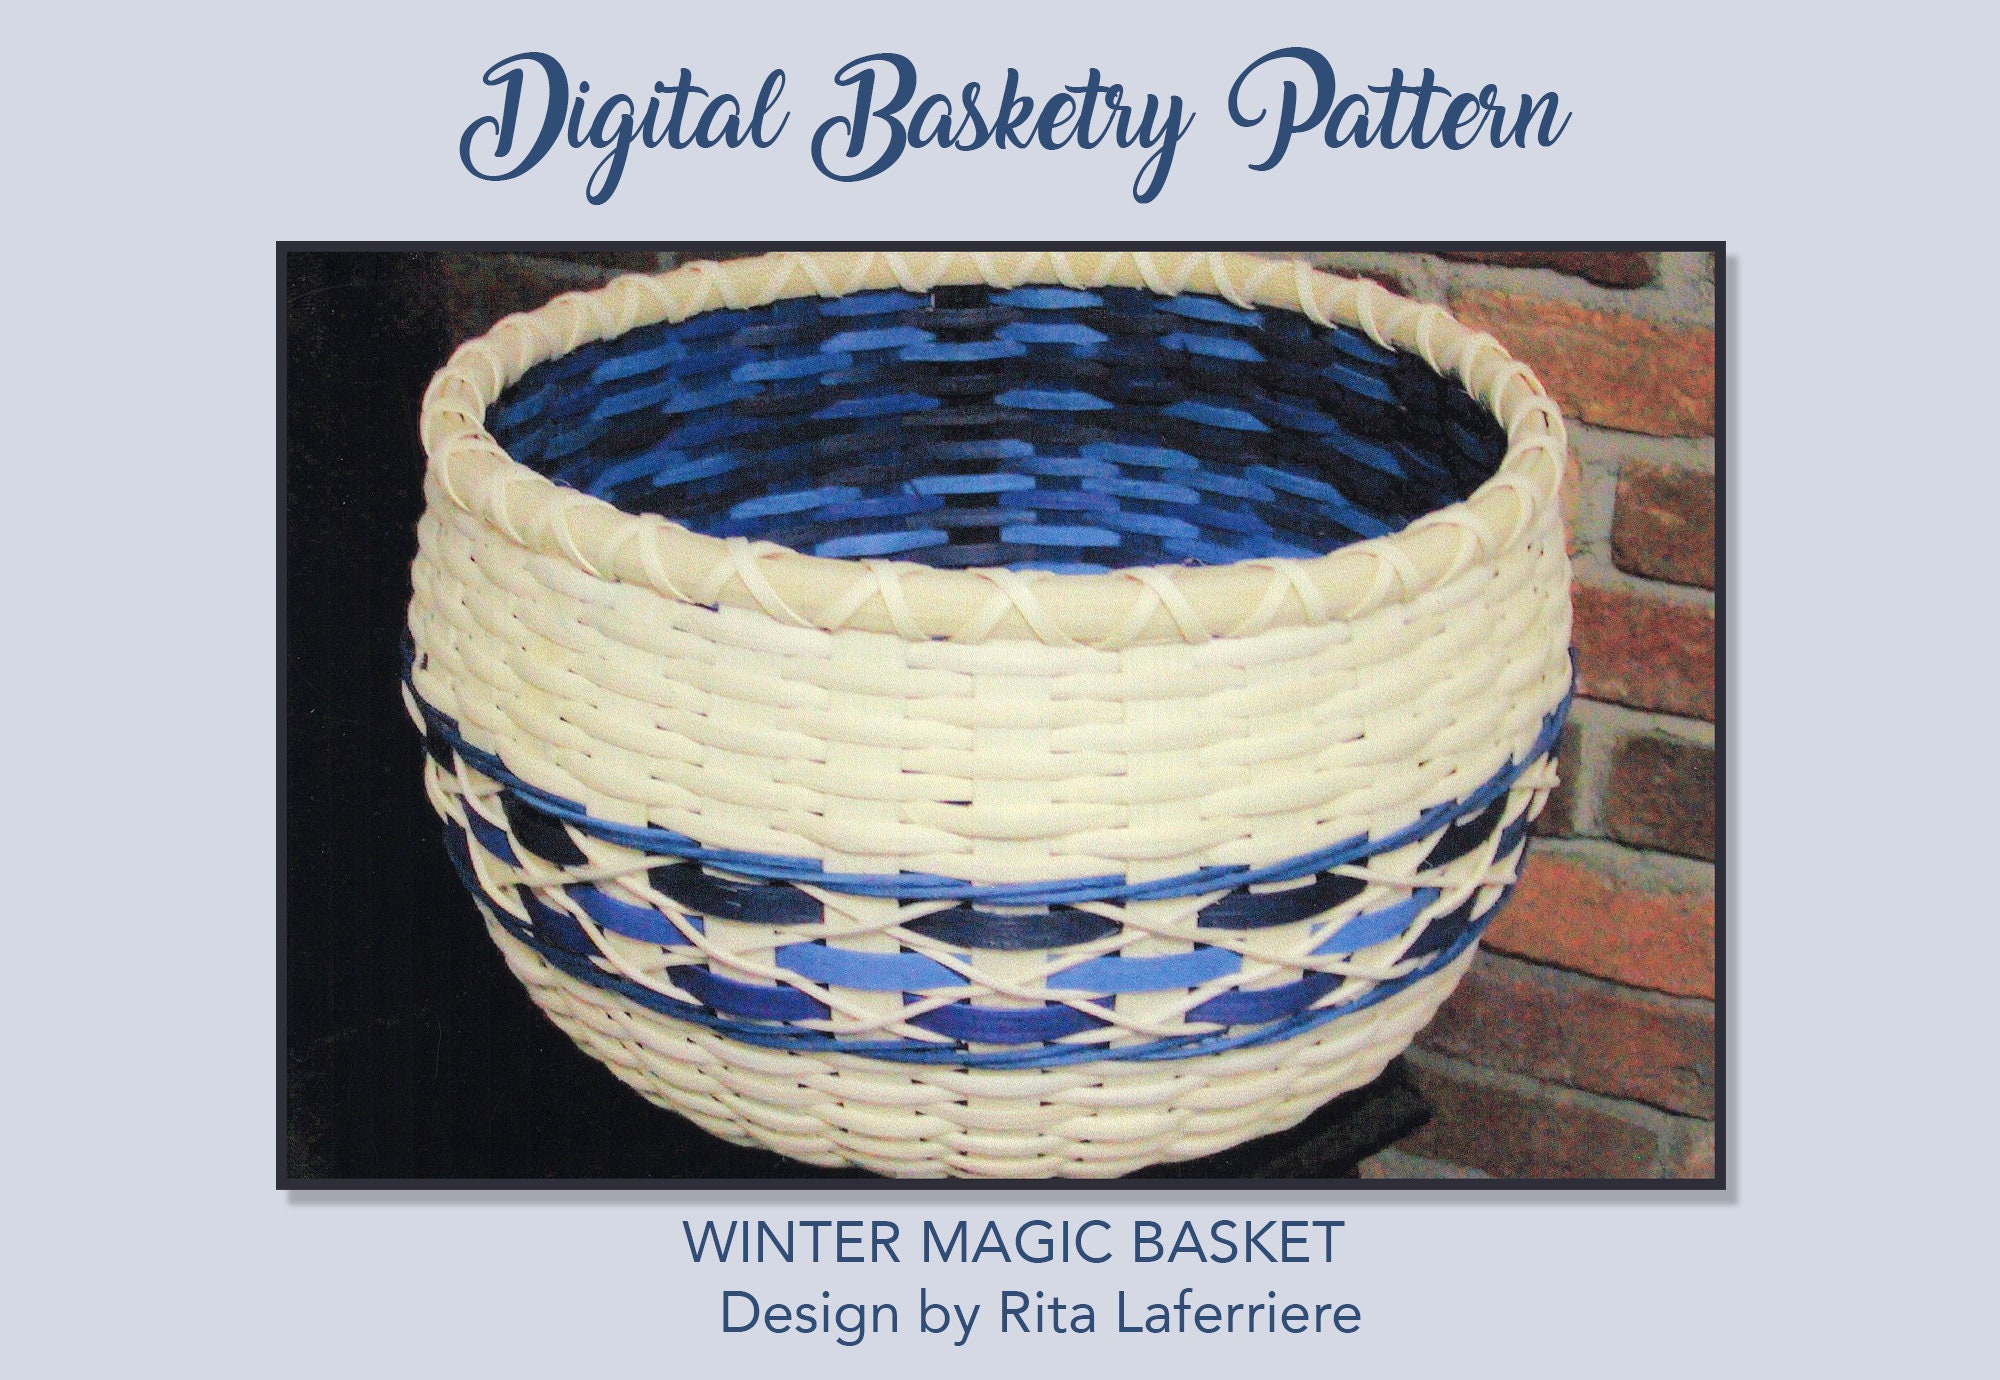 Book: Basket Weaving Crafts Basket Weaving Patterns Basket Weaving Supplies  Basket Making Supplies 